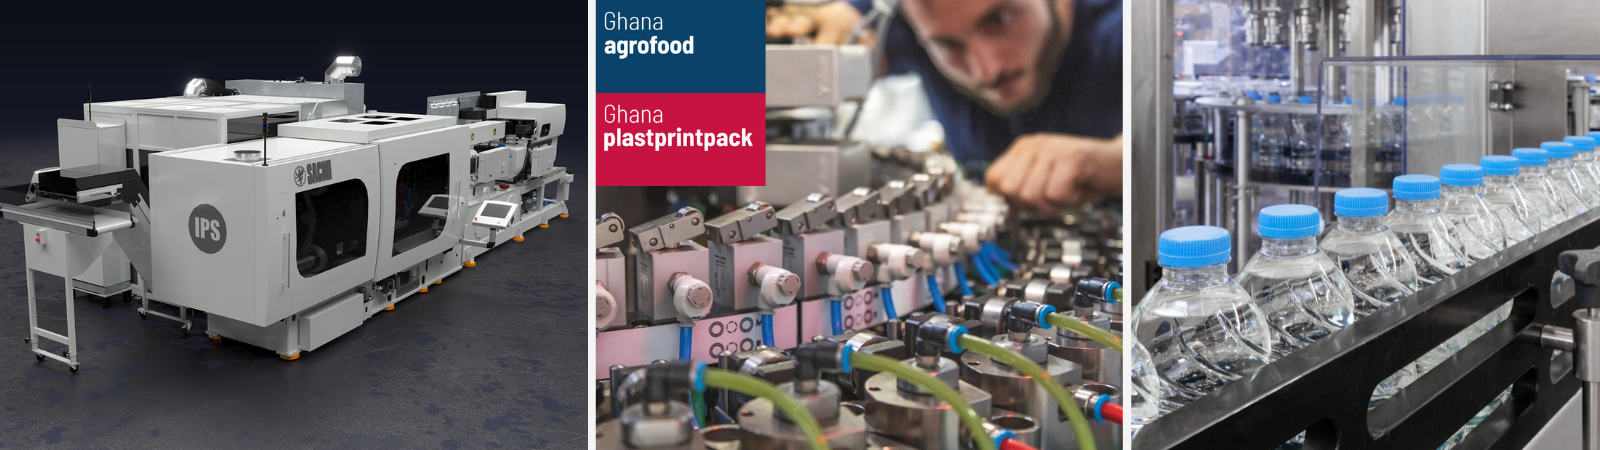 Plastprint Pack & Agrofood Ghana 2023